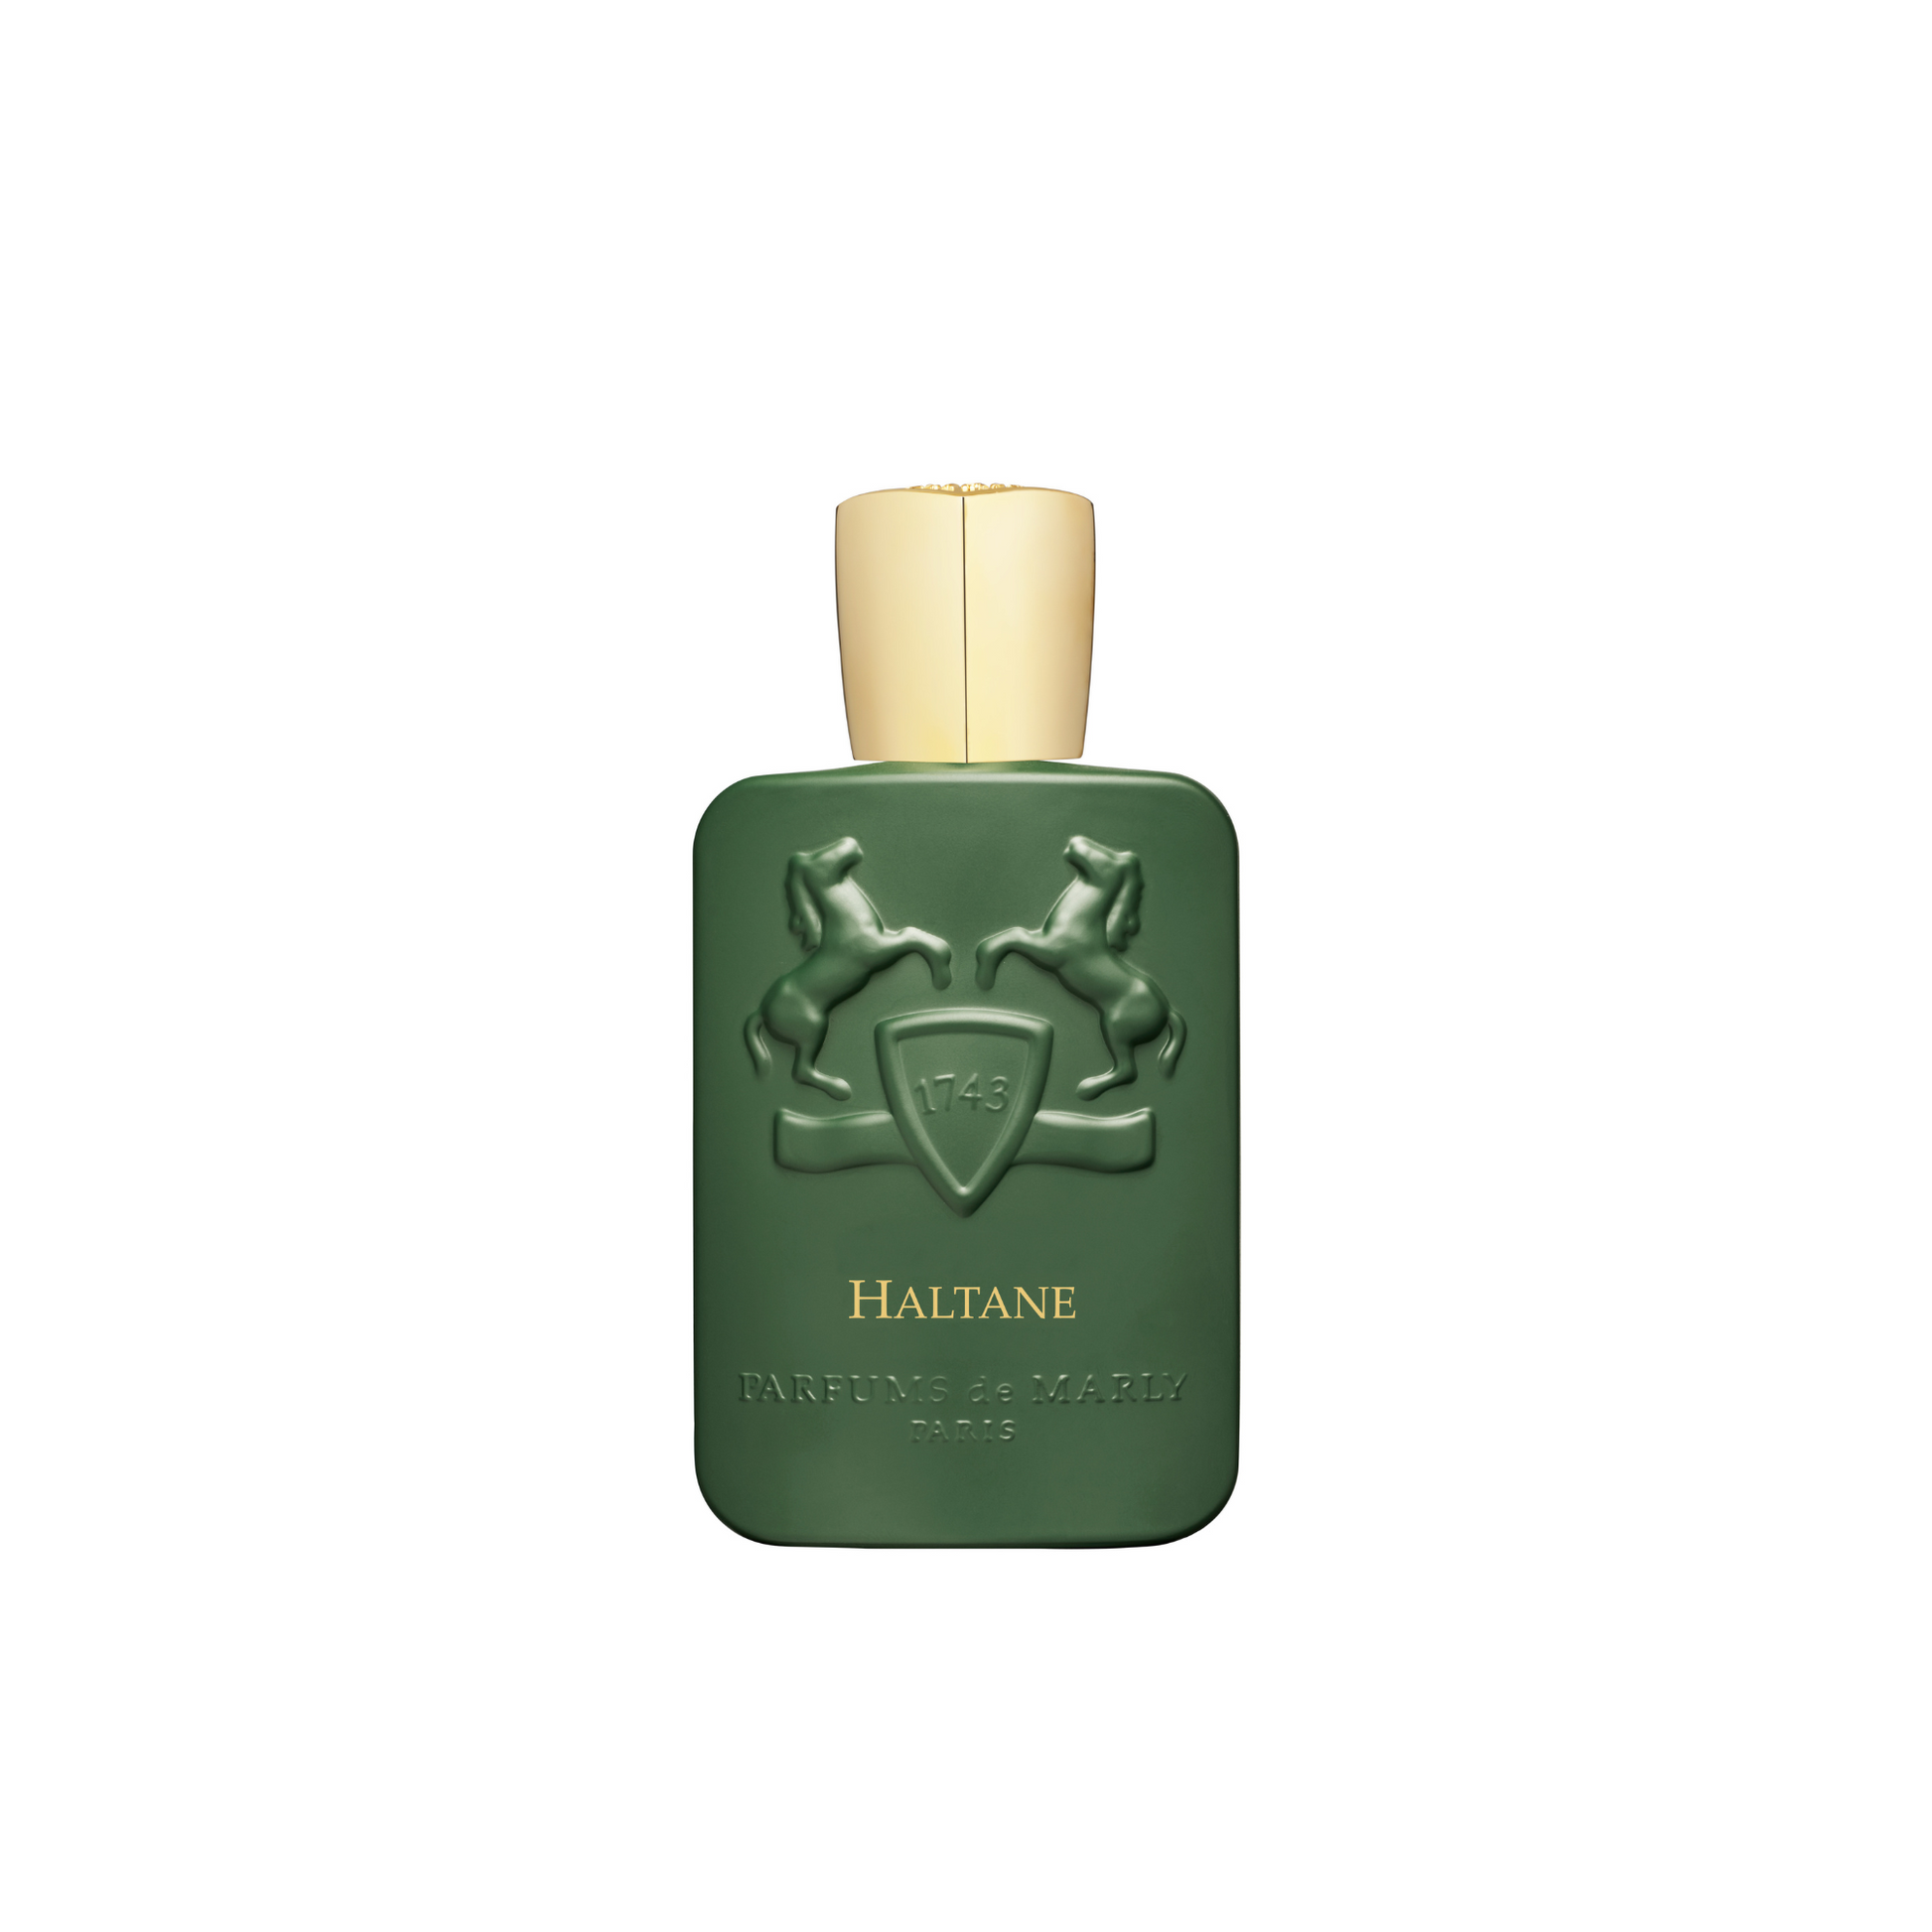 Parfums de marly - Haltane.